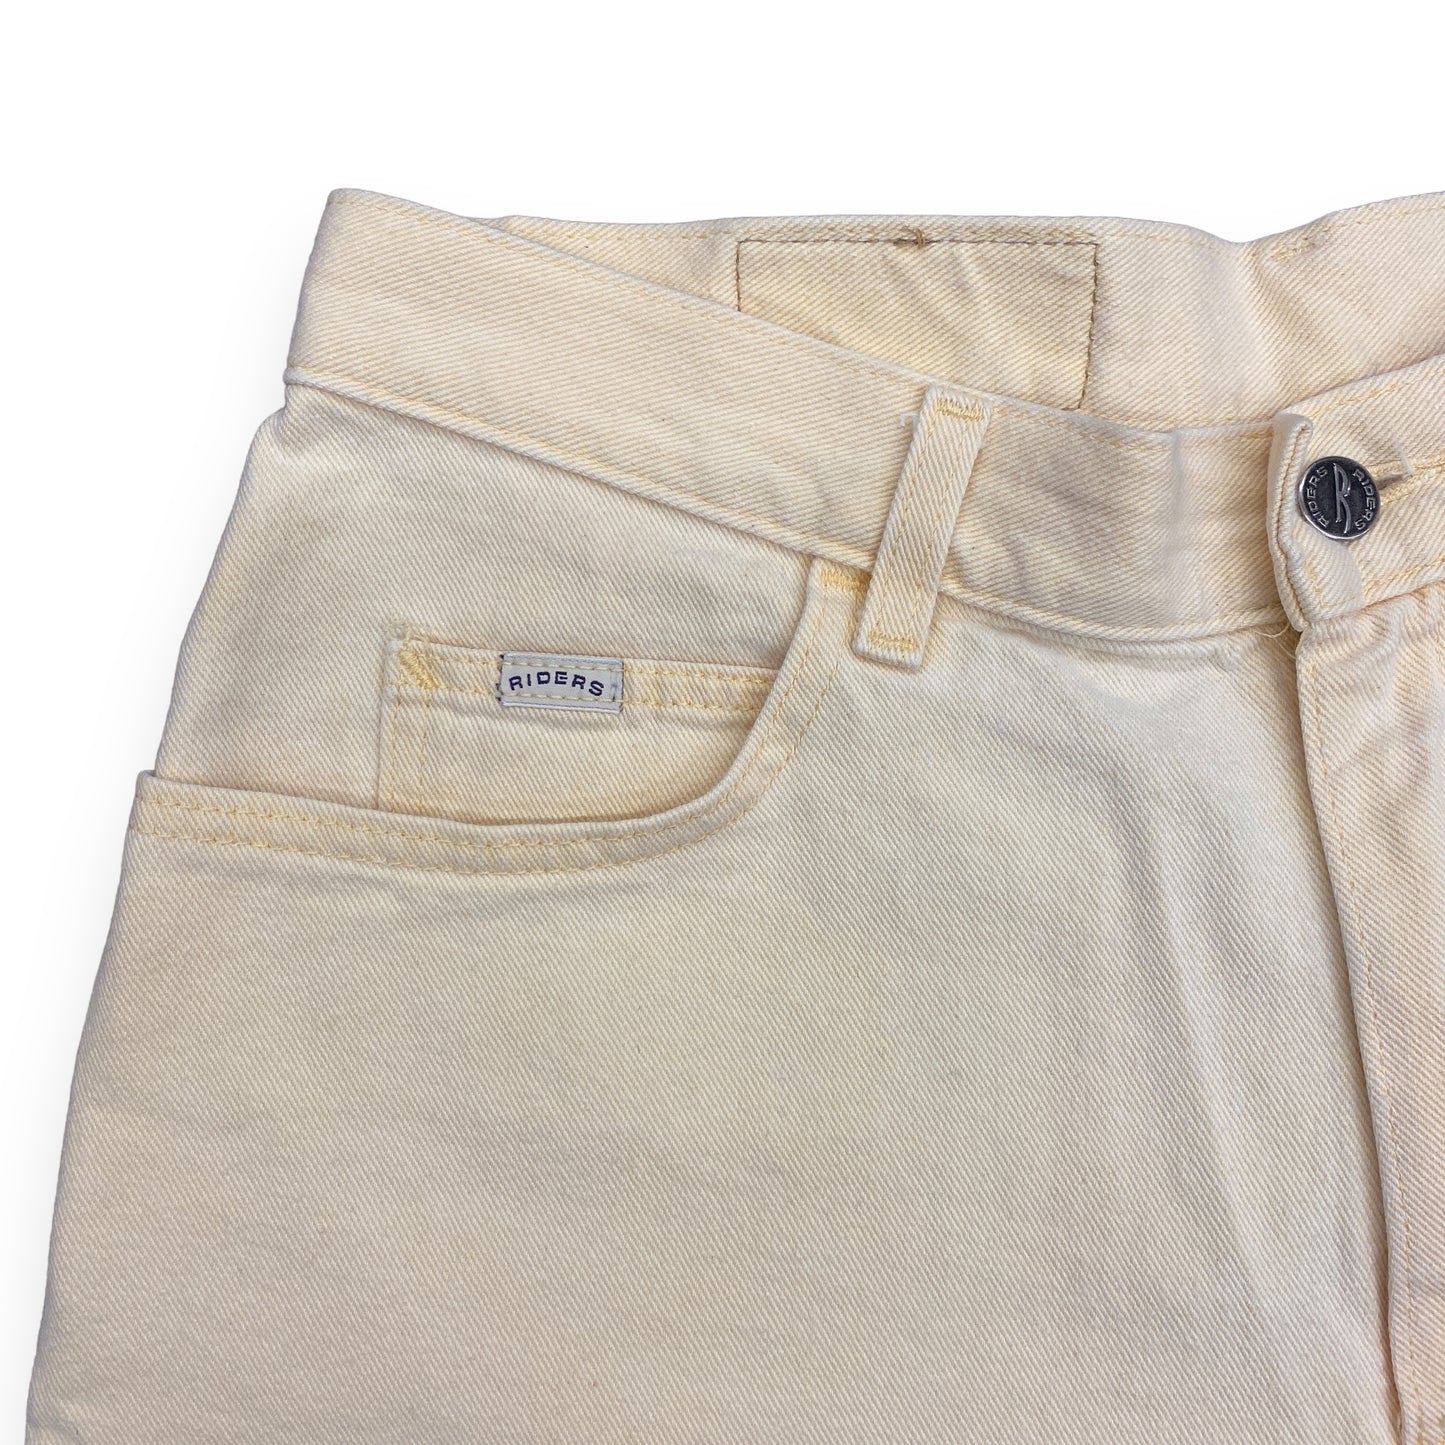 Vintage 1990s Lee Riders Cream Color Shorts - 32"x6"